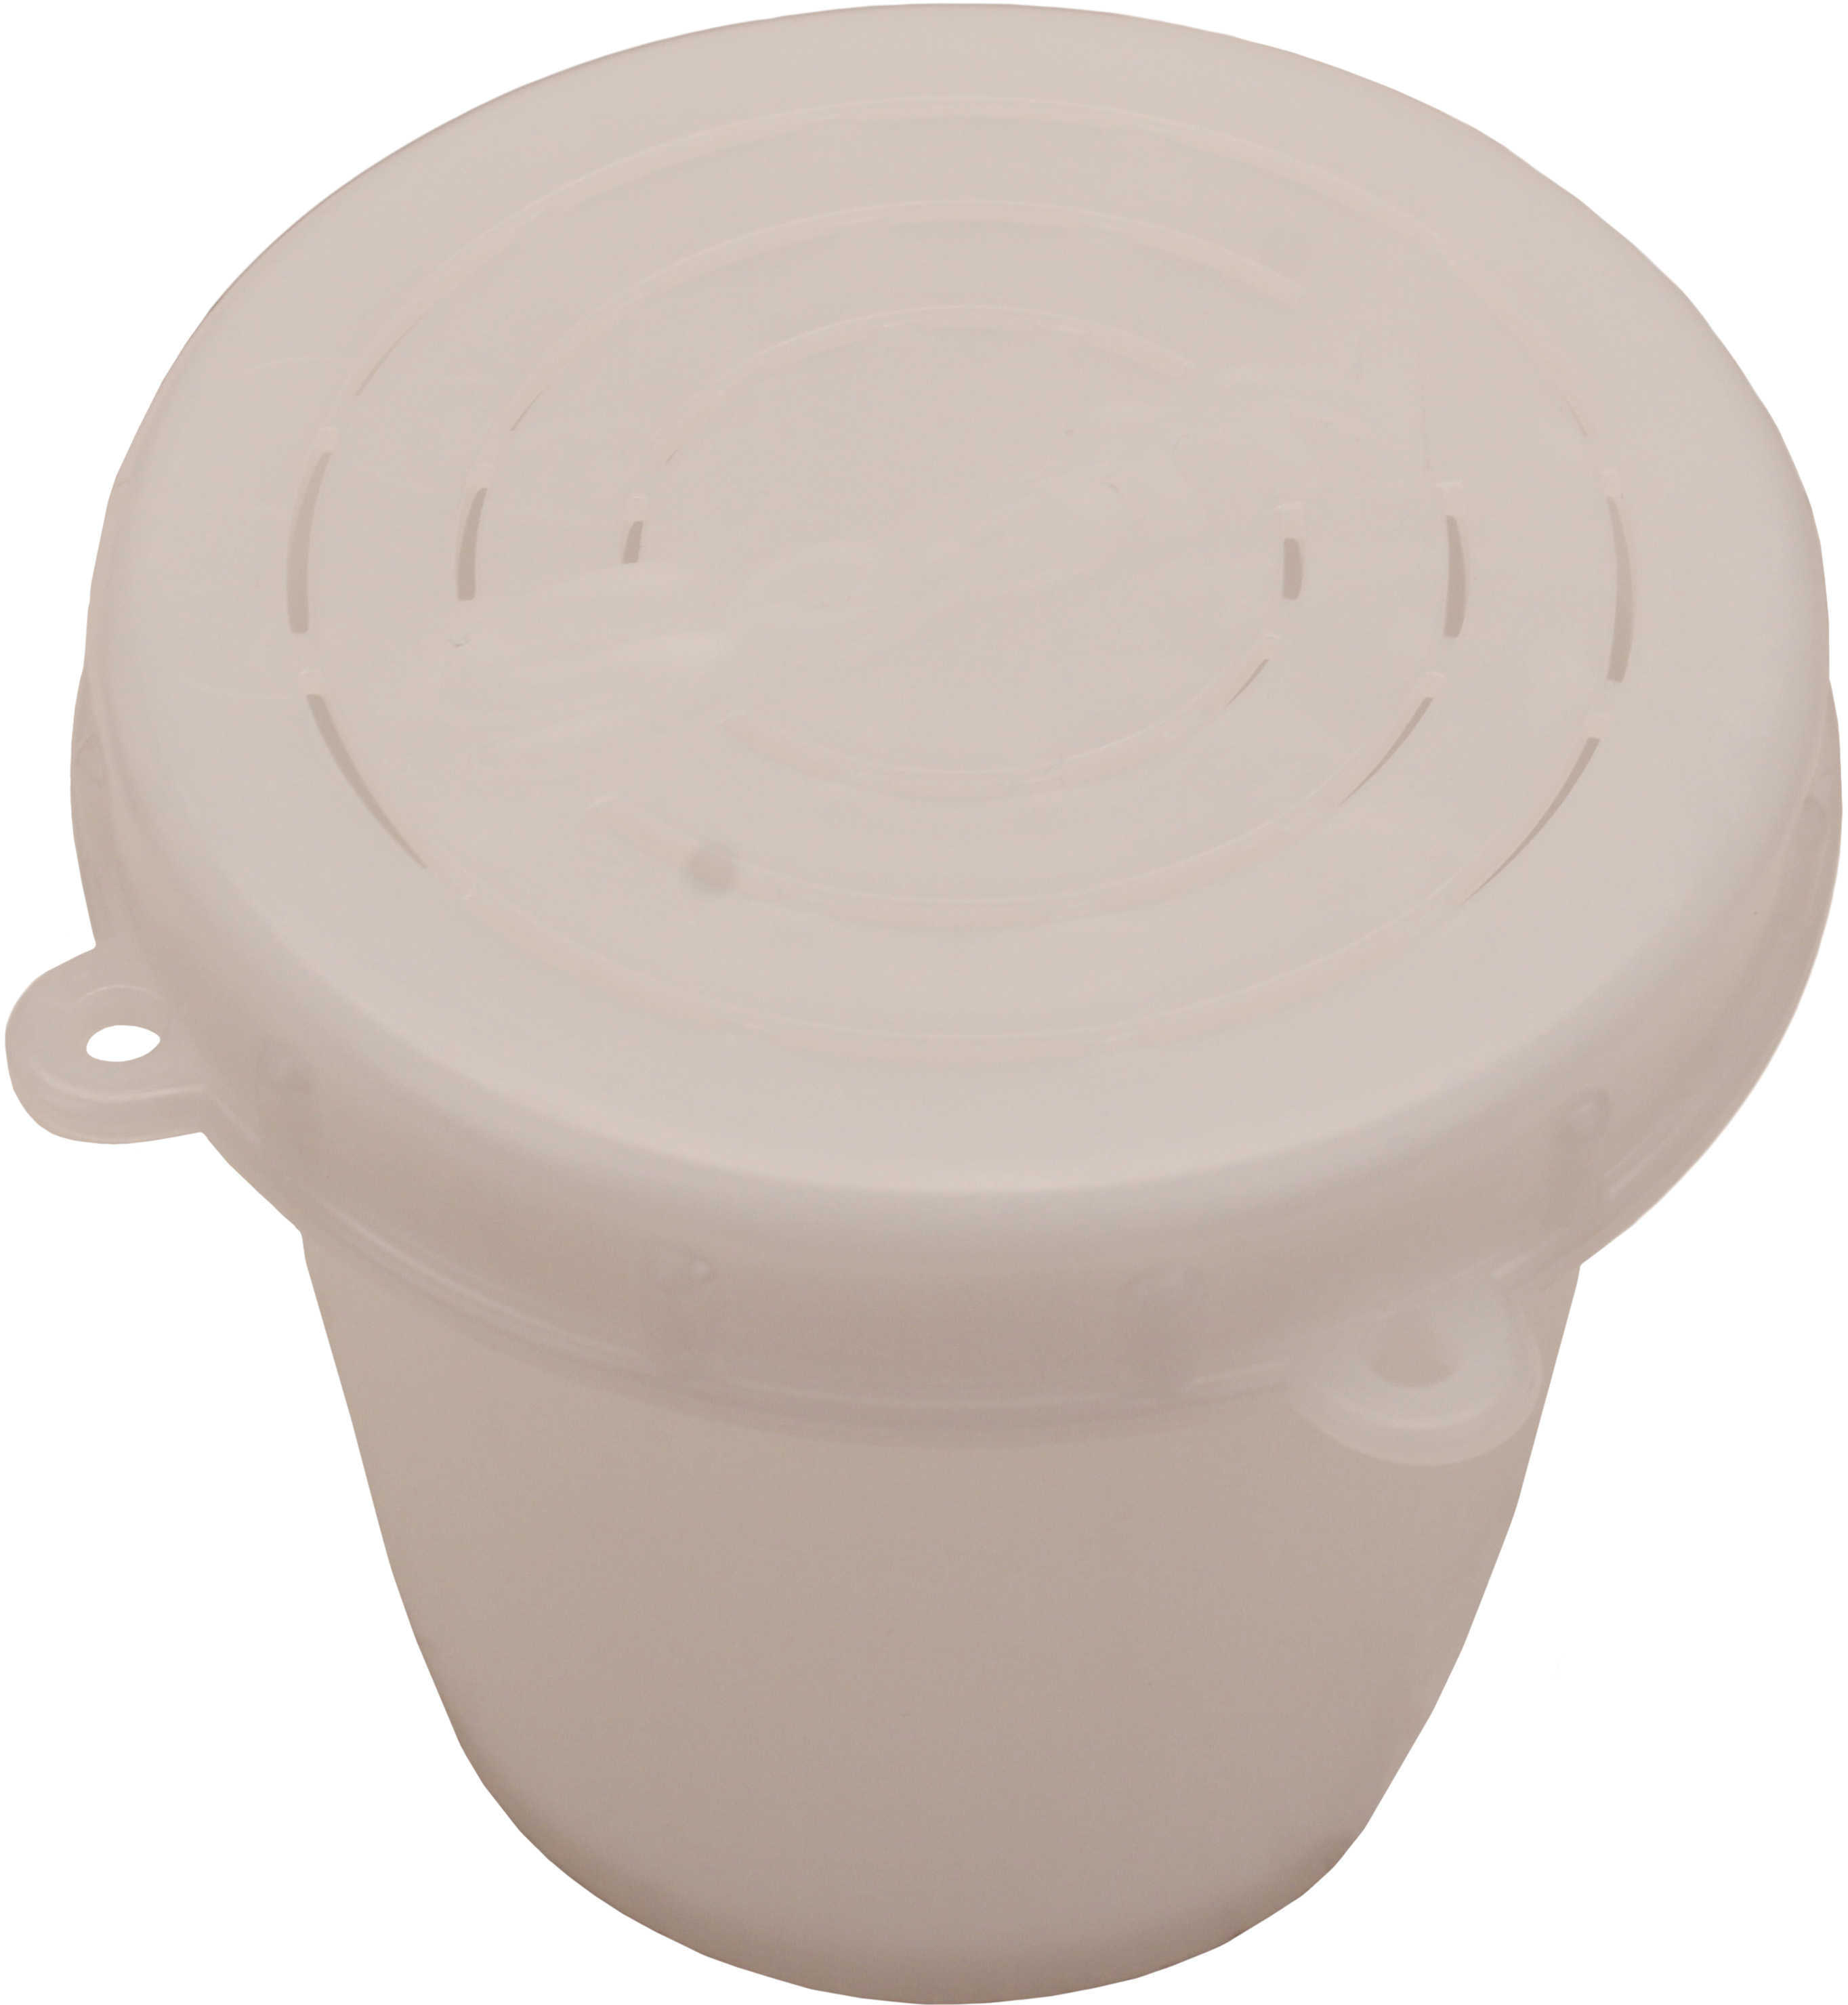 Scotty Crab Diner Bait Jar with Lid 1/2 Liter, White Md: 0650